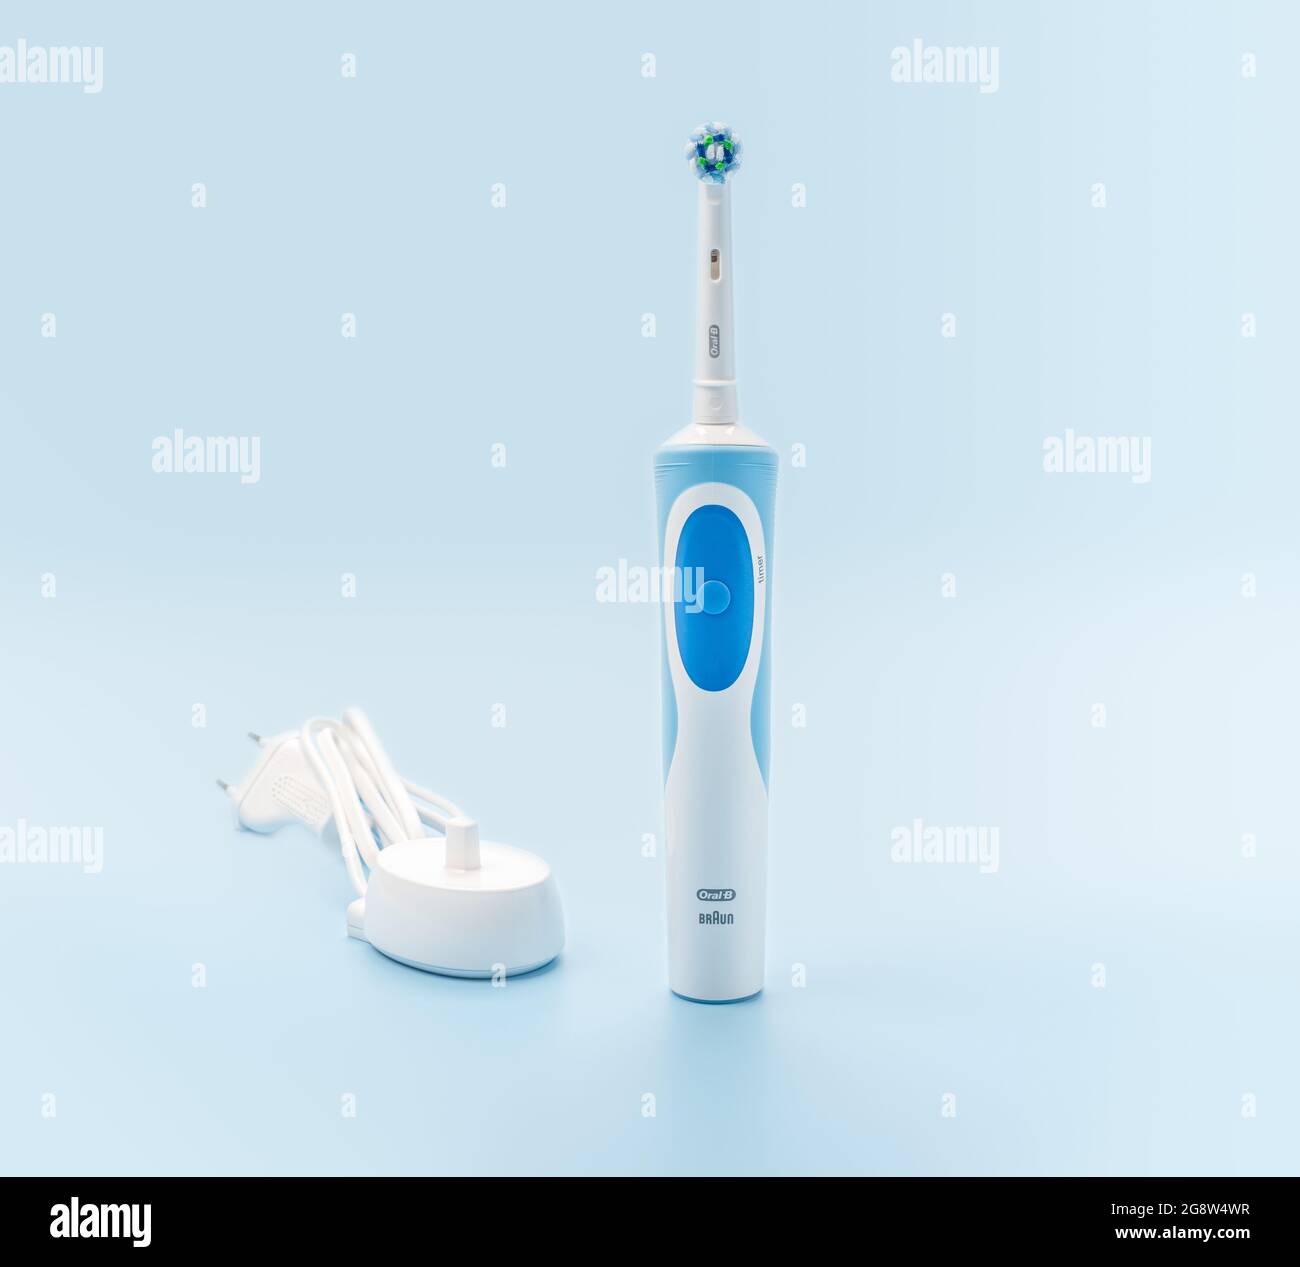 Oral b cepillo electrico fotografías e imágenes de alta resolución - Alamy